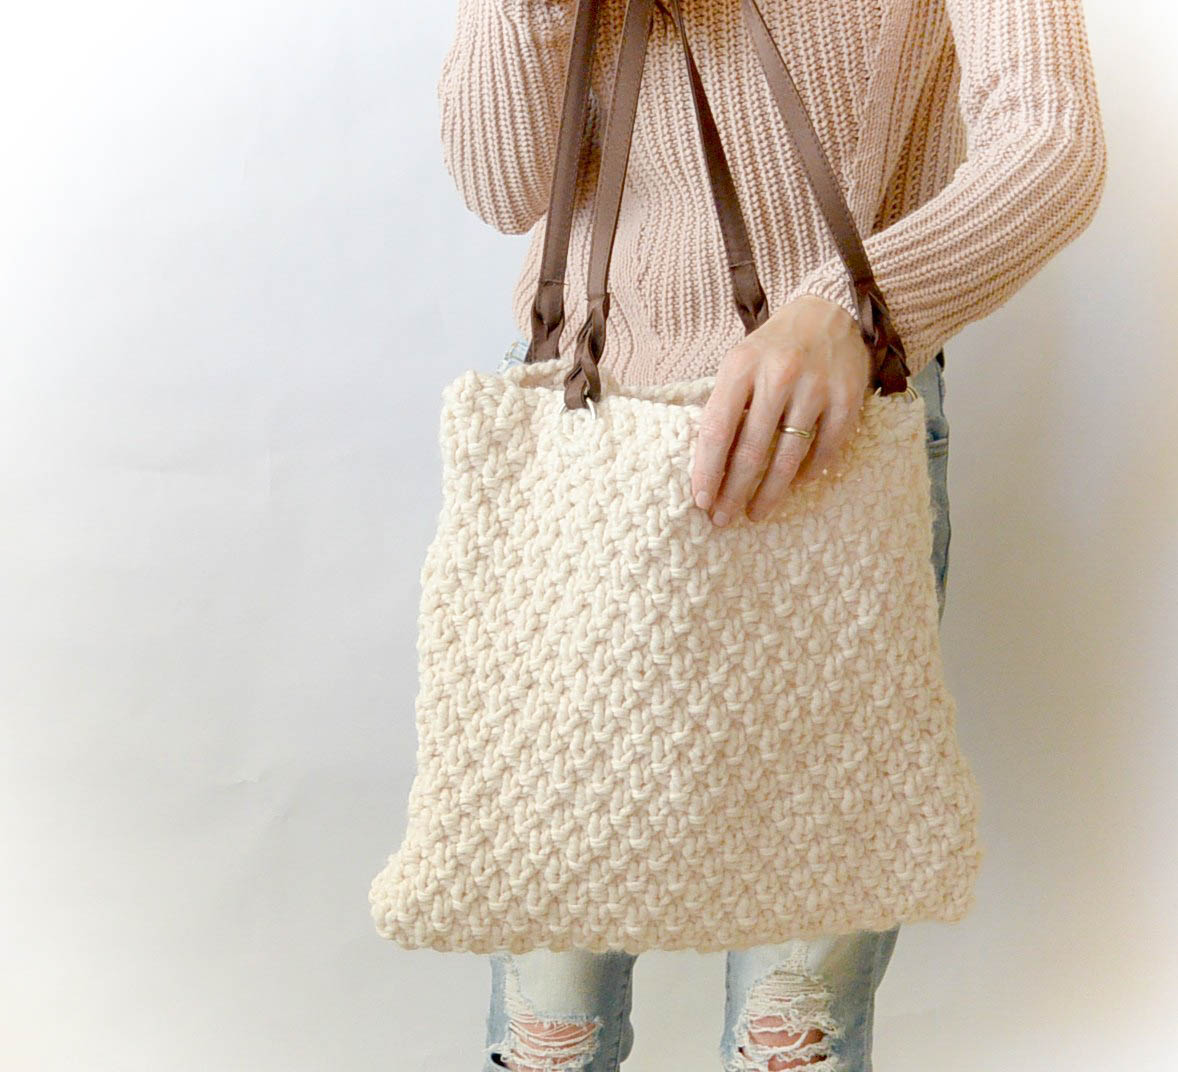 How To Make A Hobo Bag - JoAnn | Jo-Ann | Knitting bag pattern, Purse  patterns, Knitting